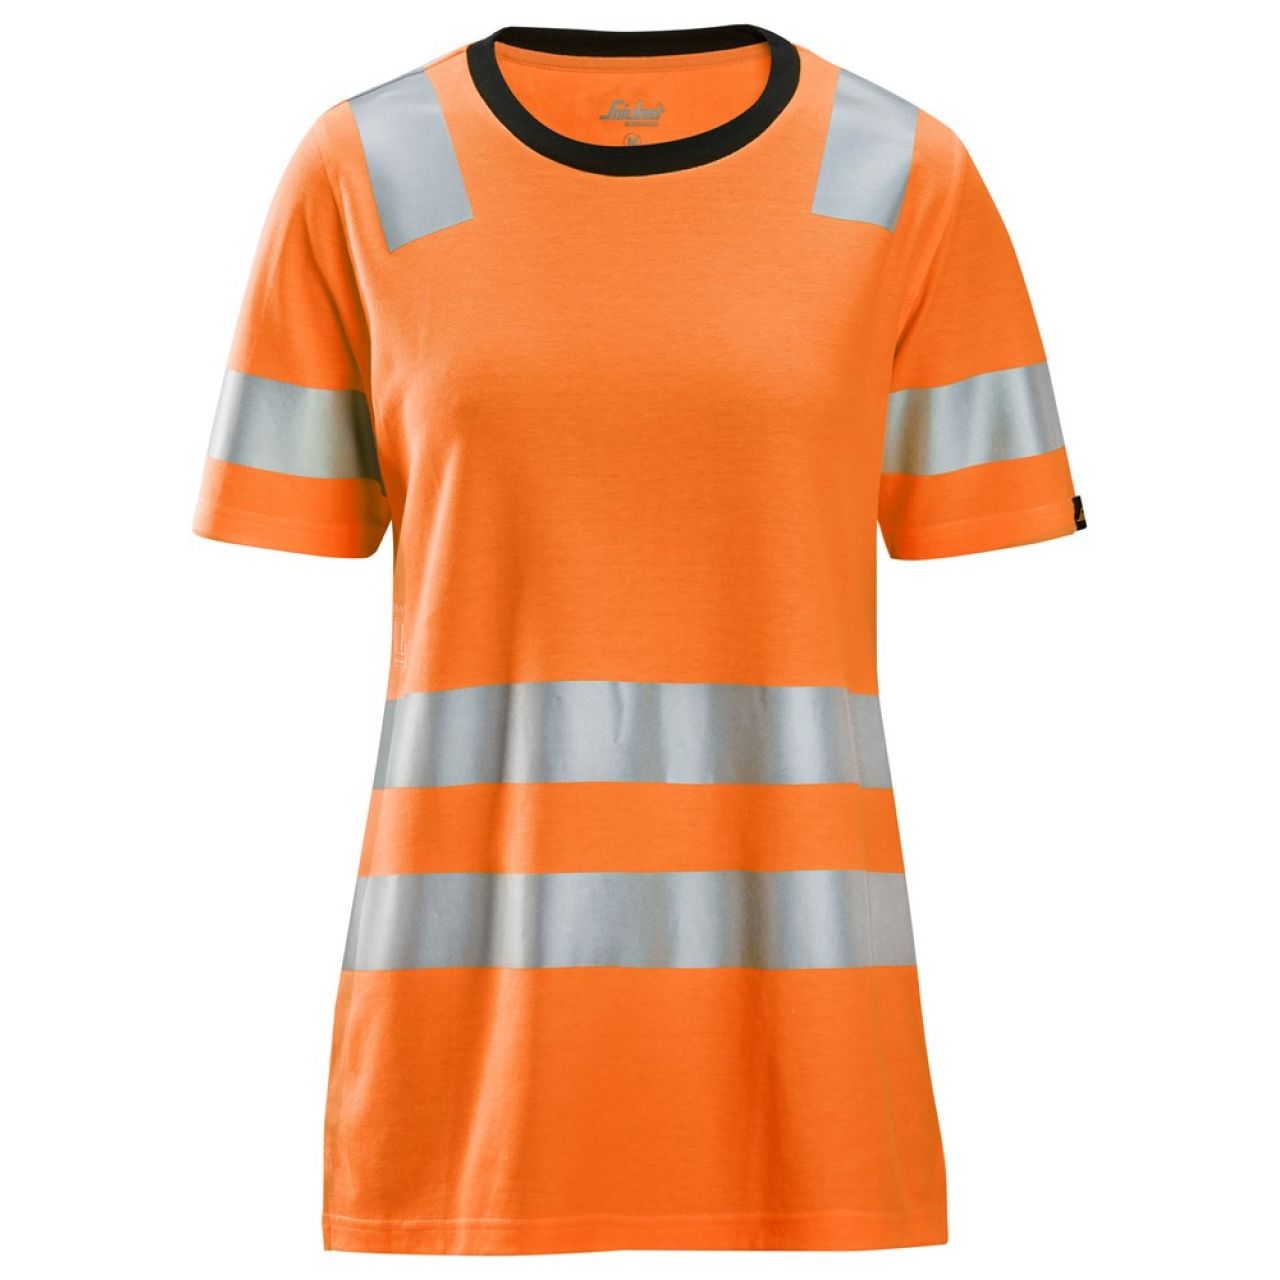 2537 Camiseta de manga corta para mujer de alta visibilidad clase 2 naranja talla S